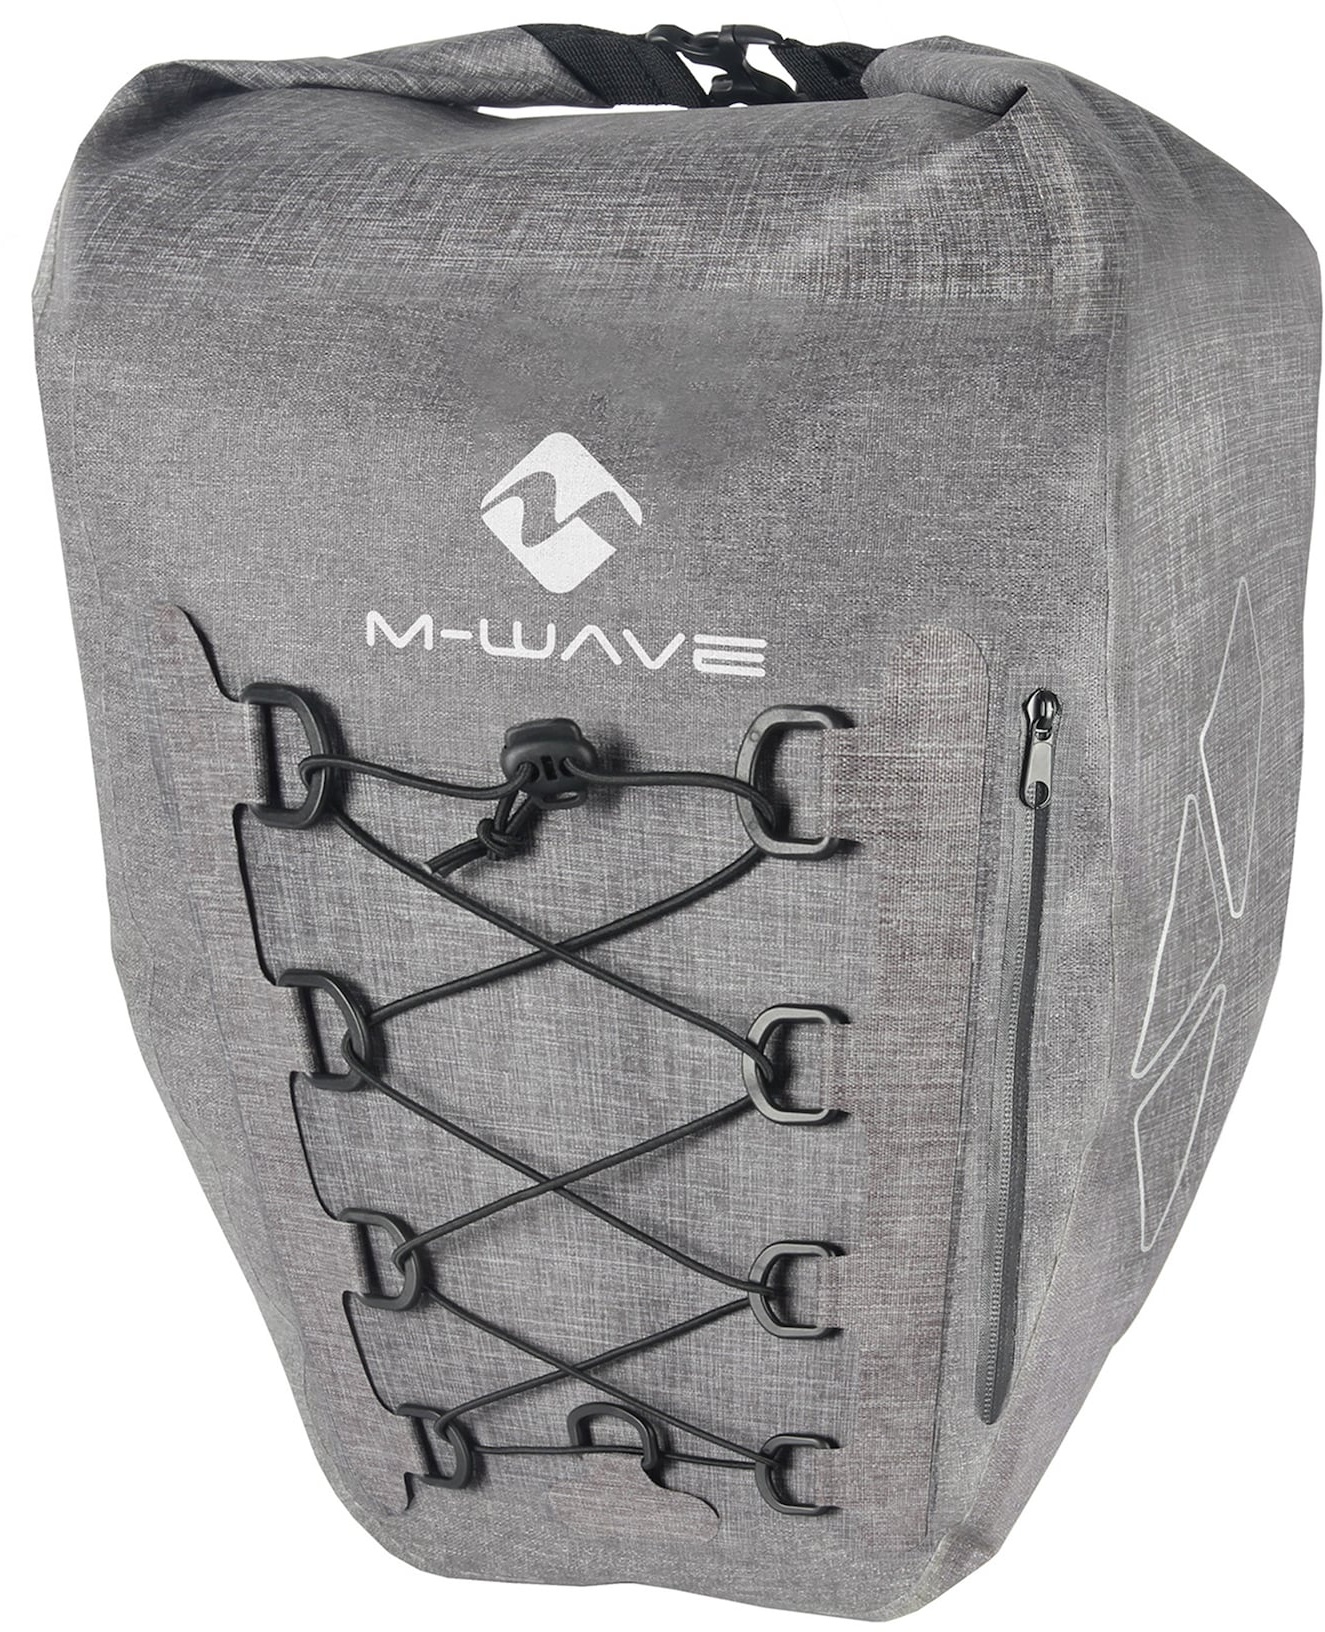 M-Wave Suburban Carry Fahrradtasche Gepäckträgertasche Fahrrad 25L Radtasche